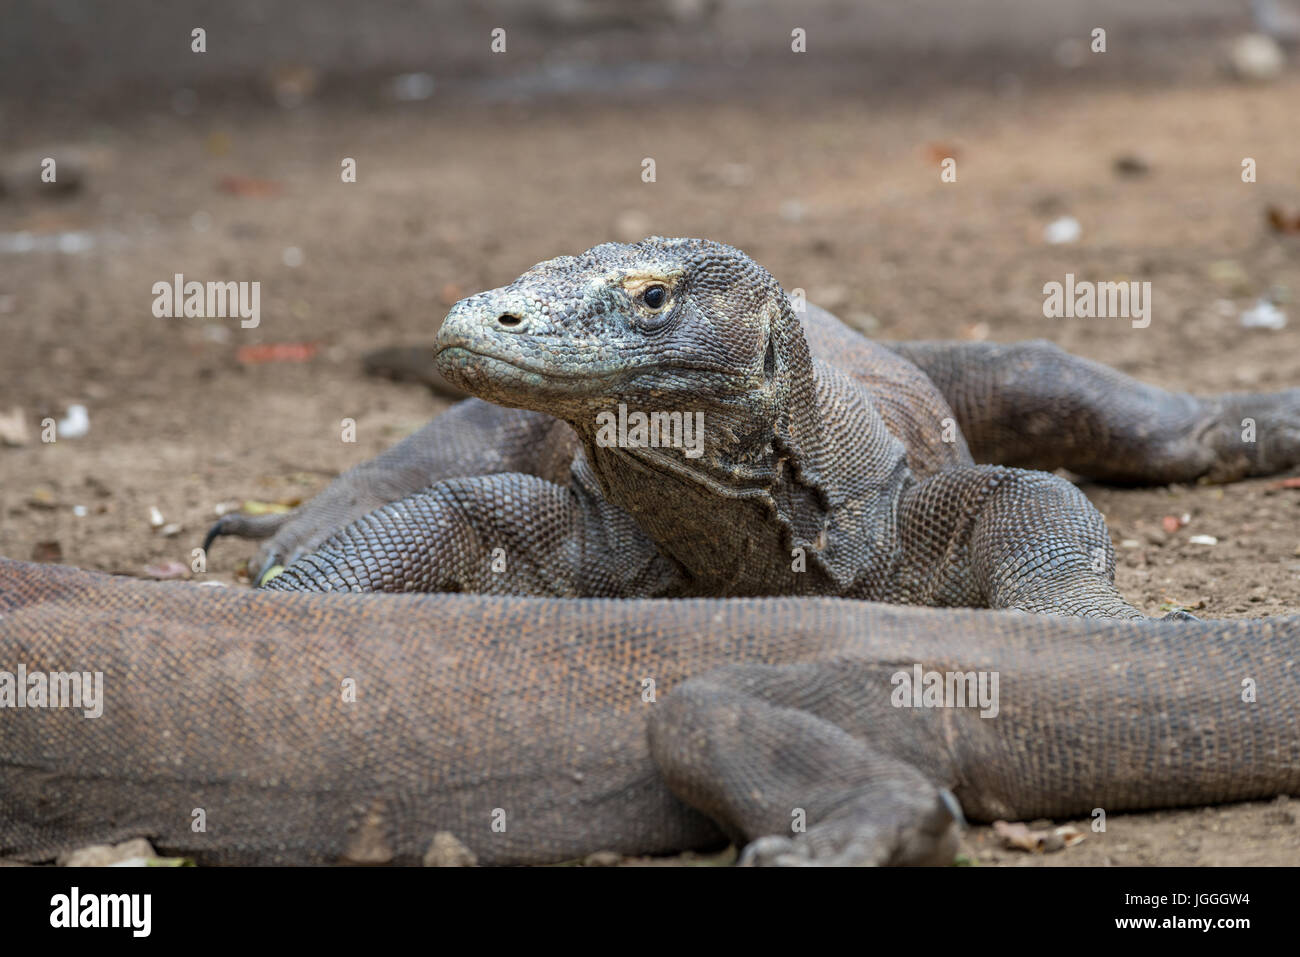 Komodo National Park, Dragons Indonesia Stock Photo